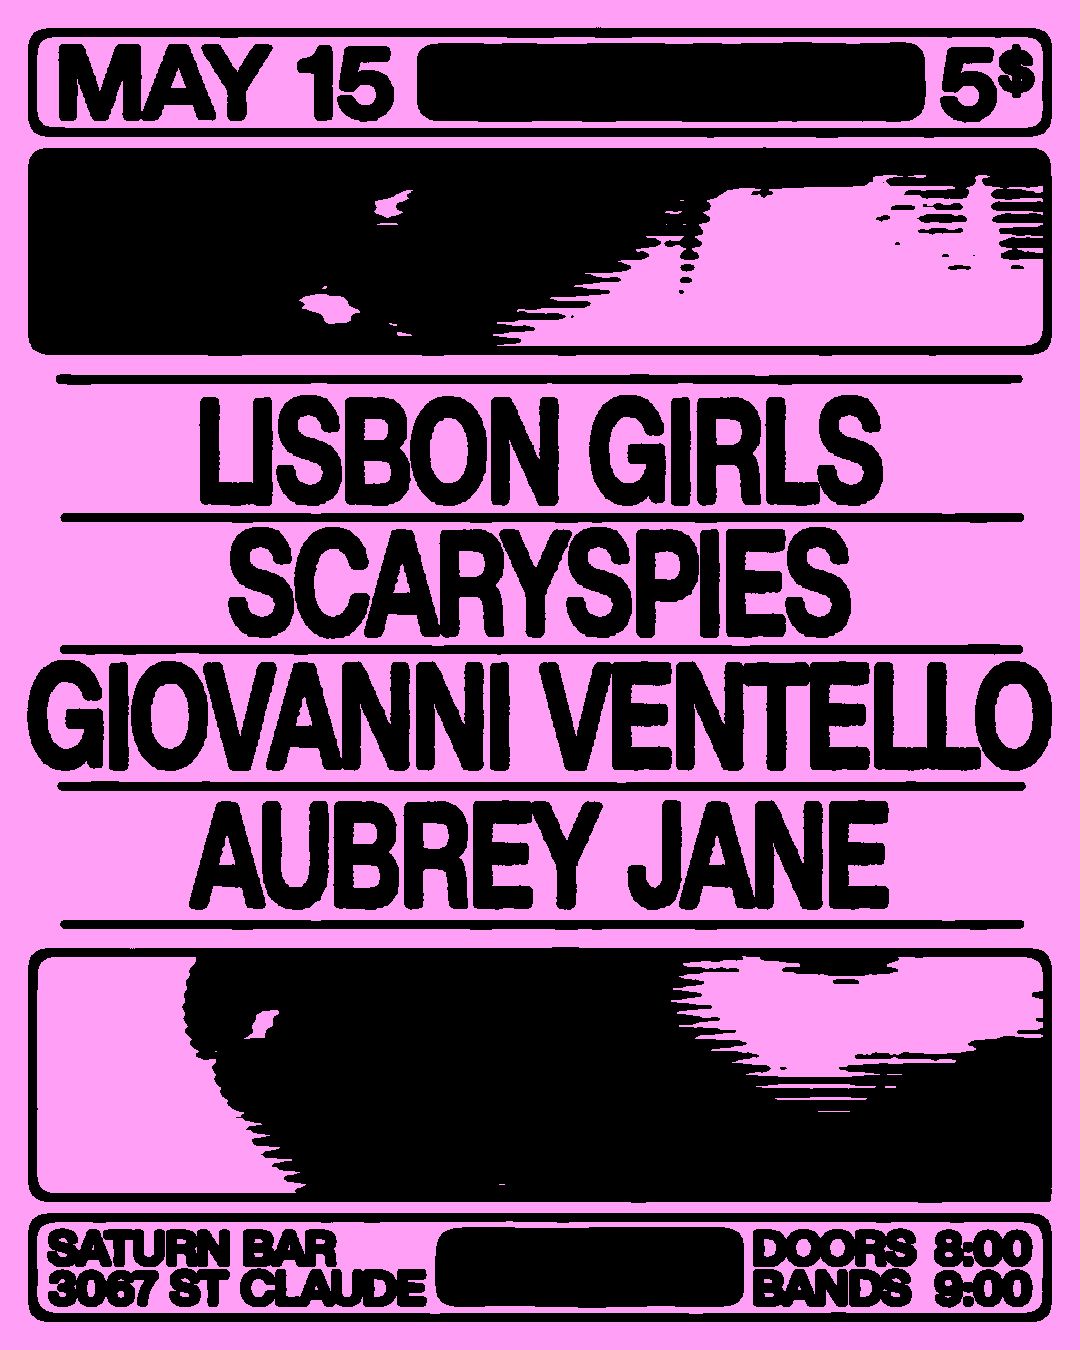 Lisbon Girls, scaryspies, Giovanni Ventello & Aubrey Jane \/\/ May 15th at Saturn Bar